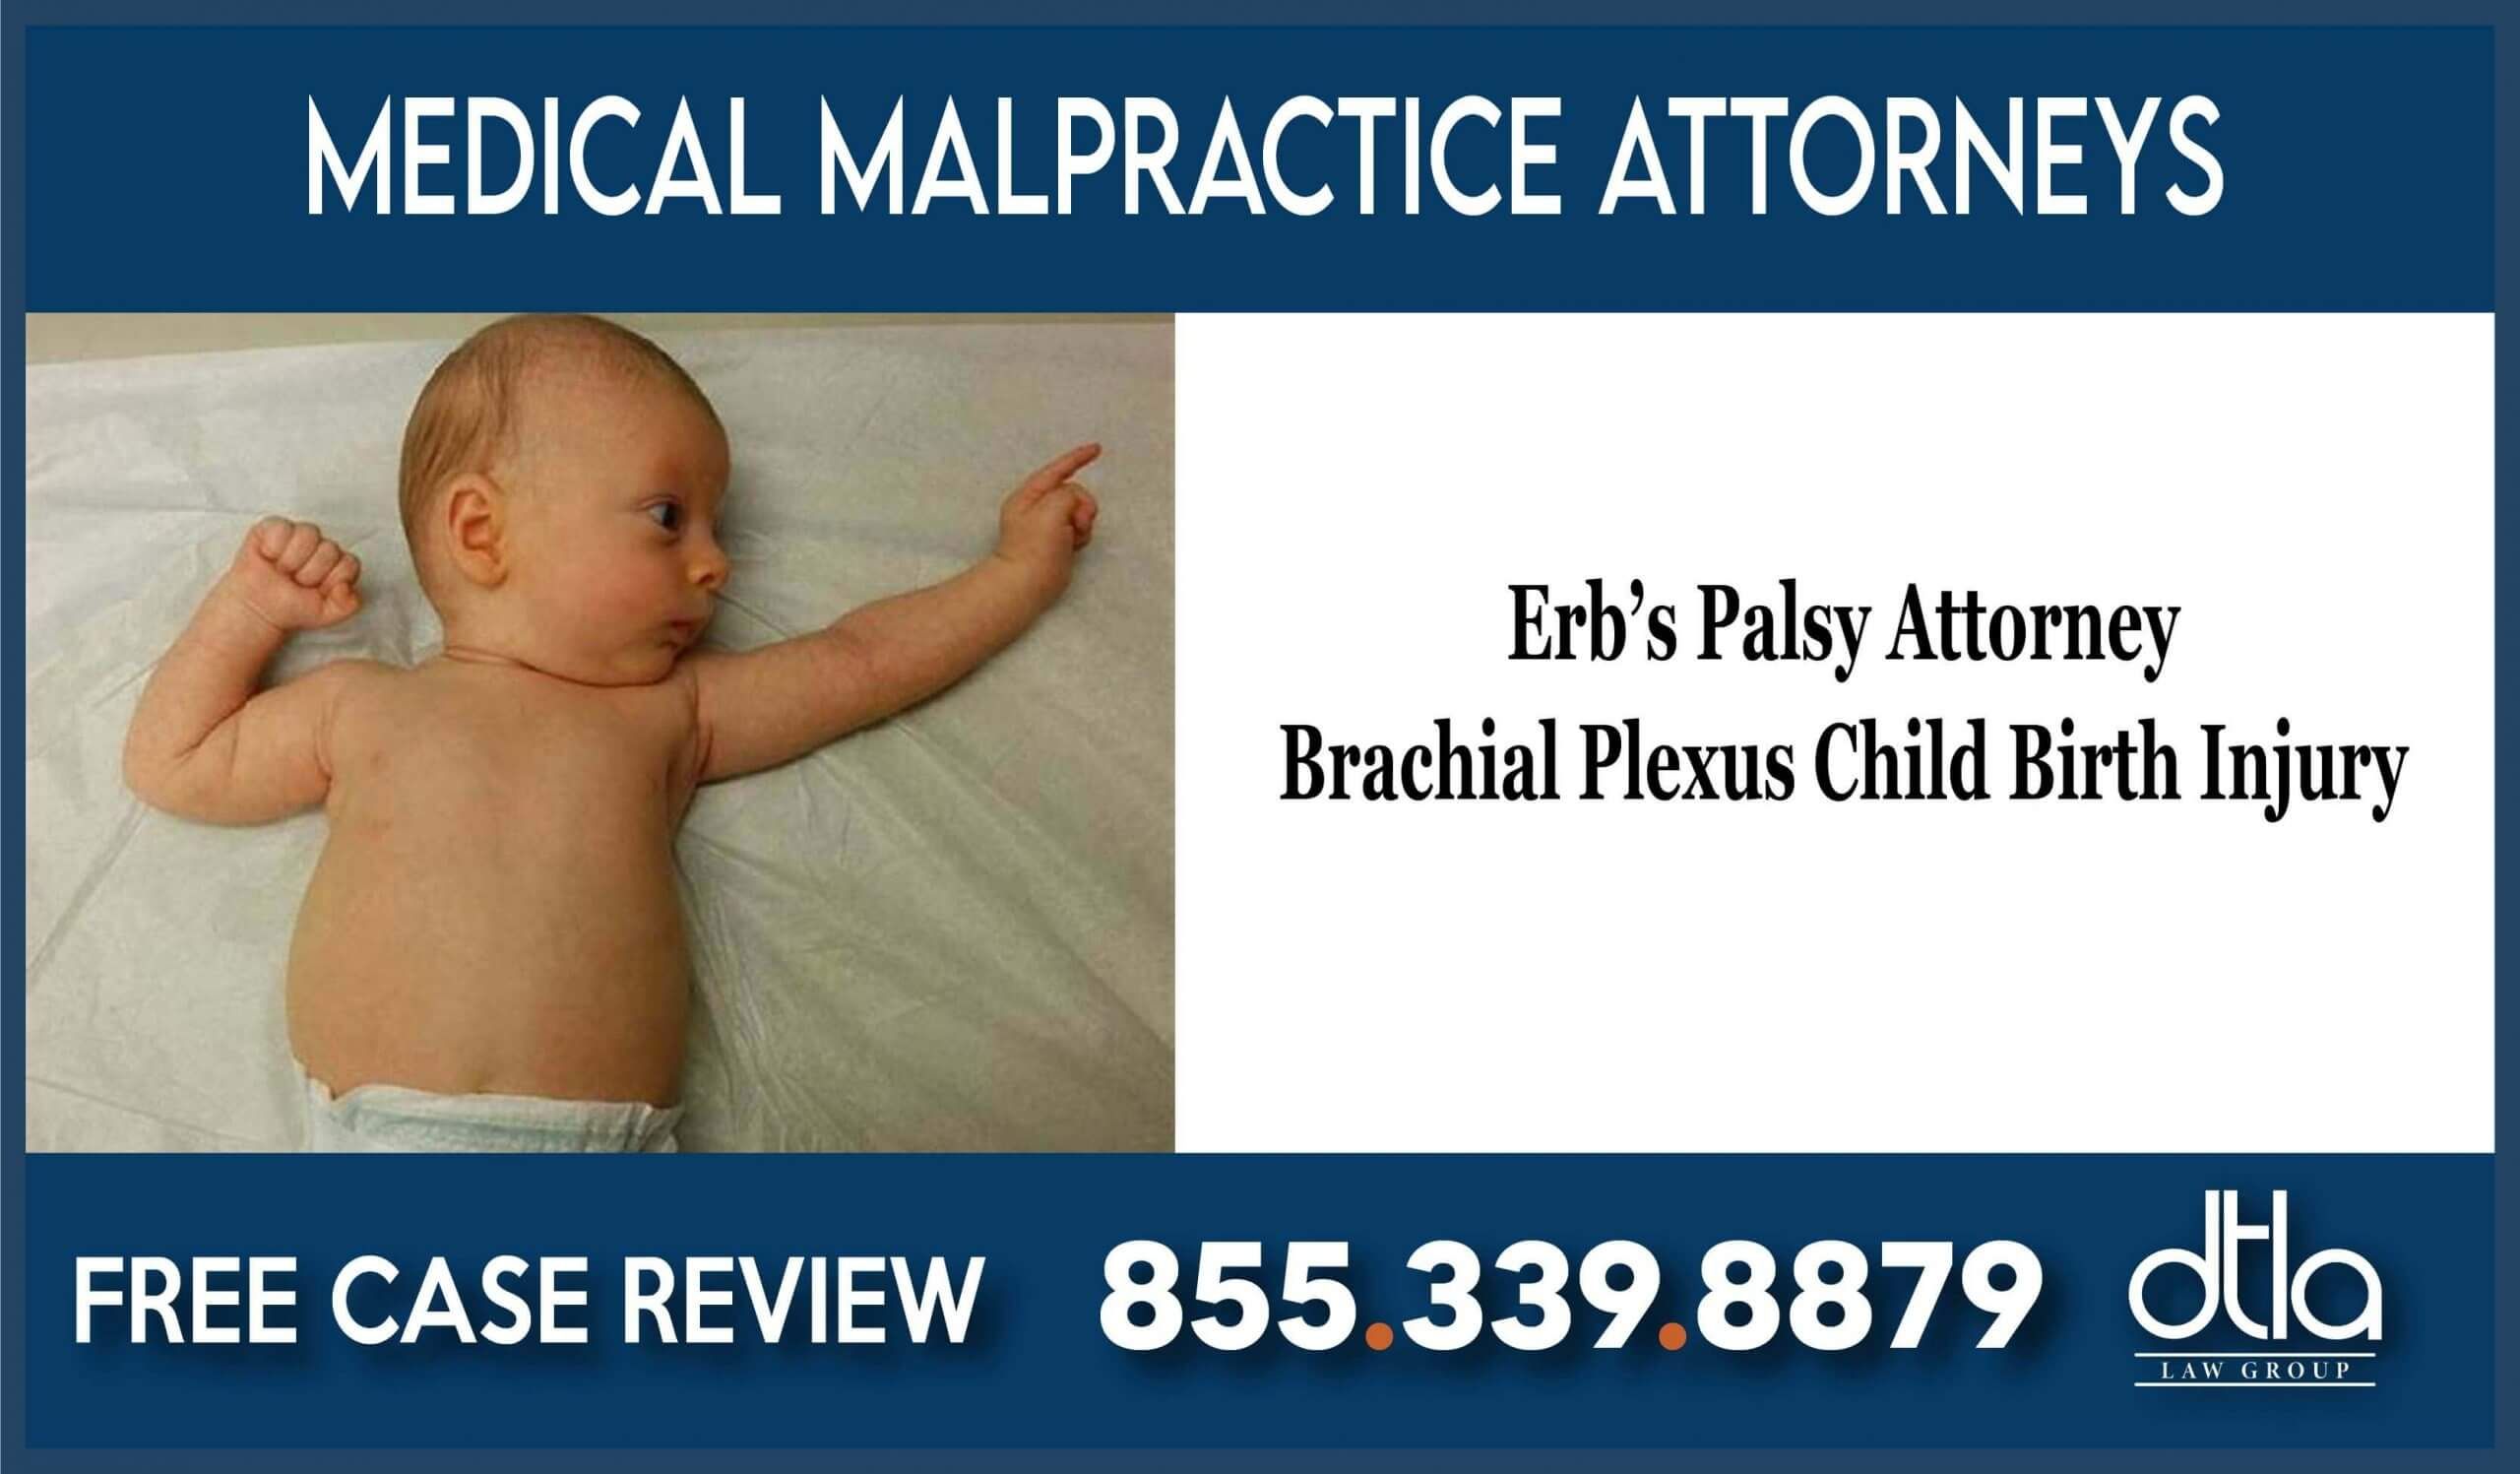 Erb’s Palsy Attorney Brachial Plexus Child Birth Injury lawyer attorney law firm sue compensation medical malpractice